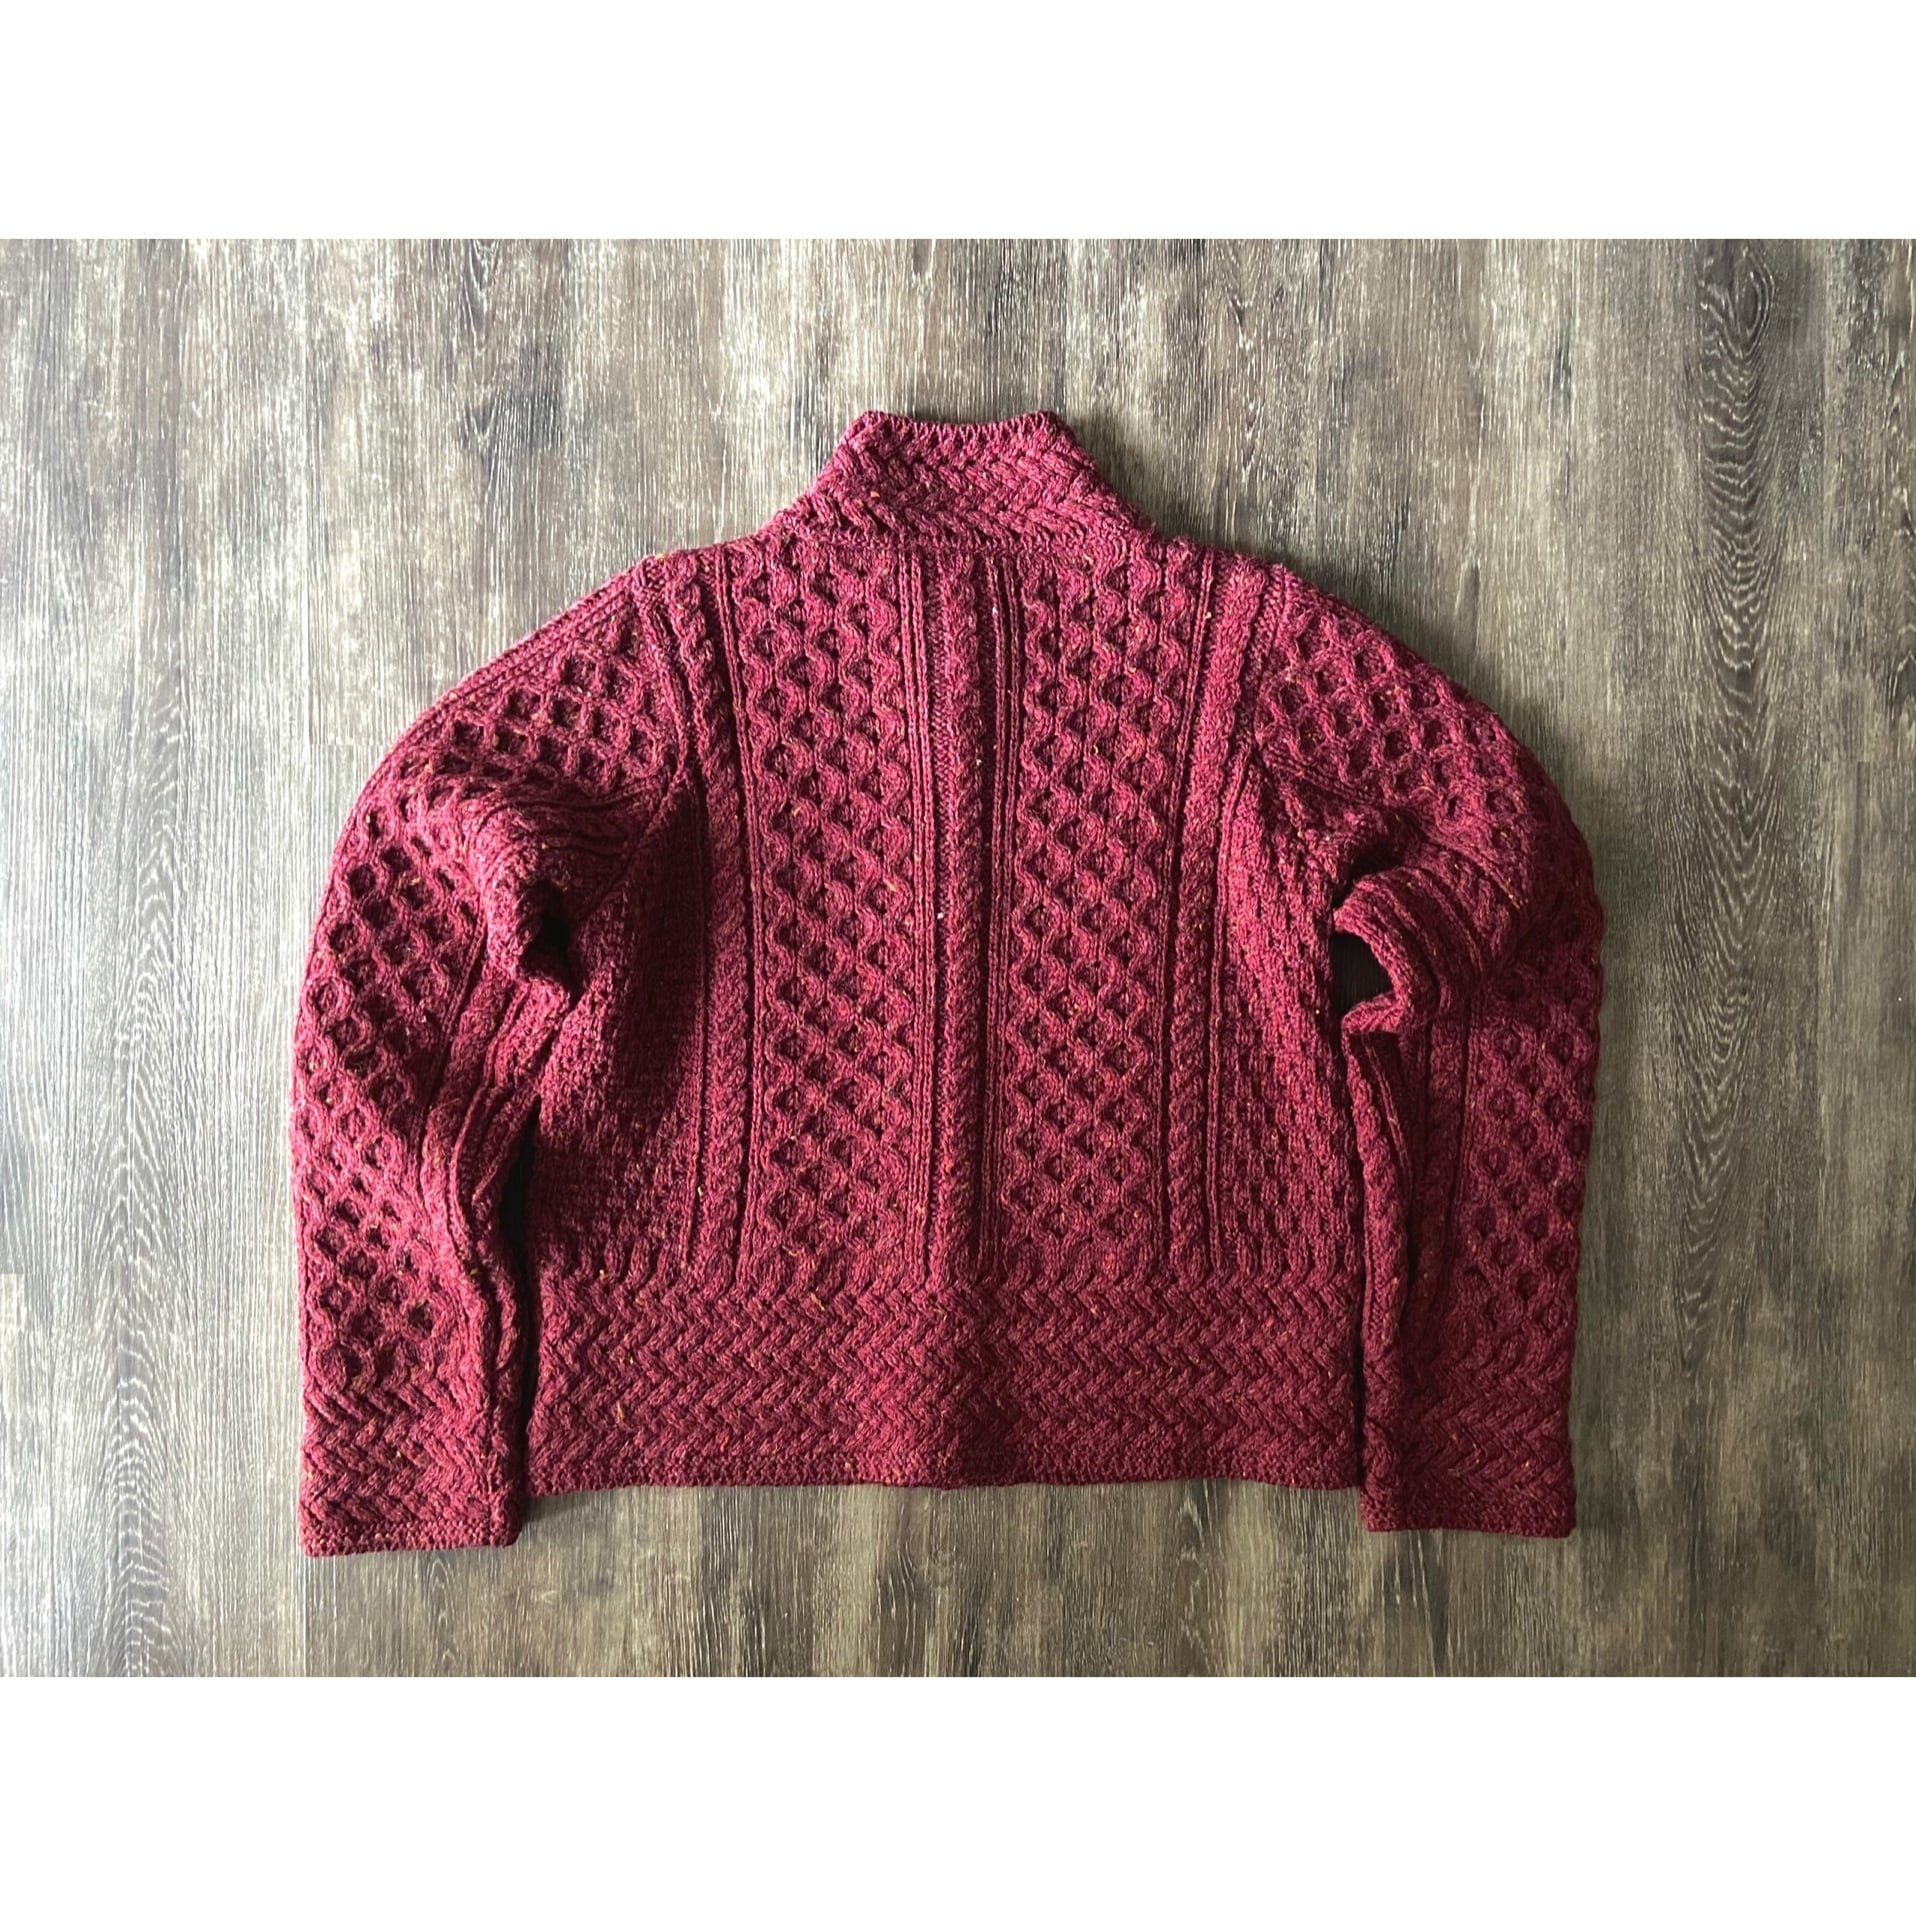 -90s carraig donn alan knit cardigan “Made in IRELAND” キャレイグドン フィッシャーマン  アランニット カーディガン